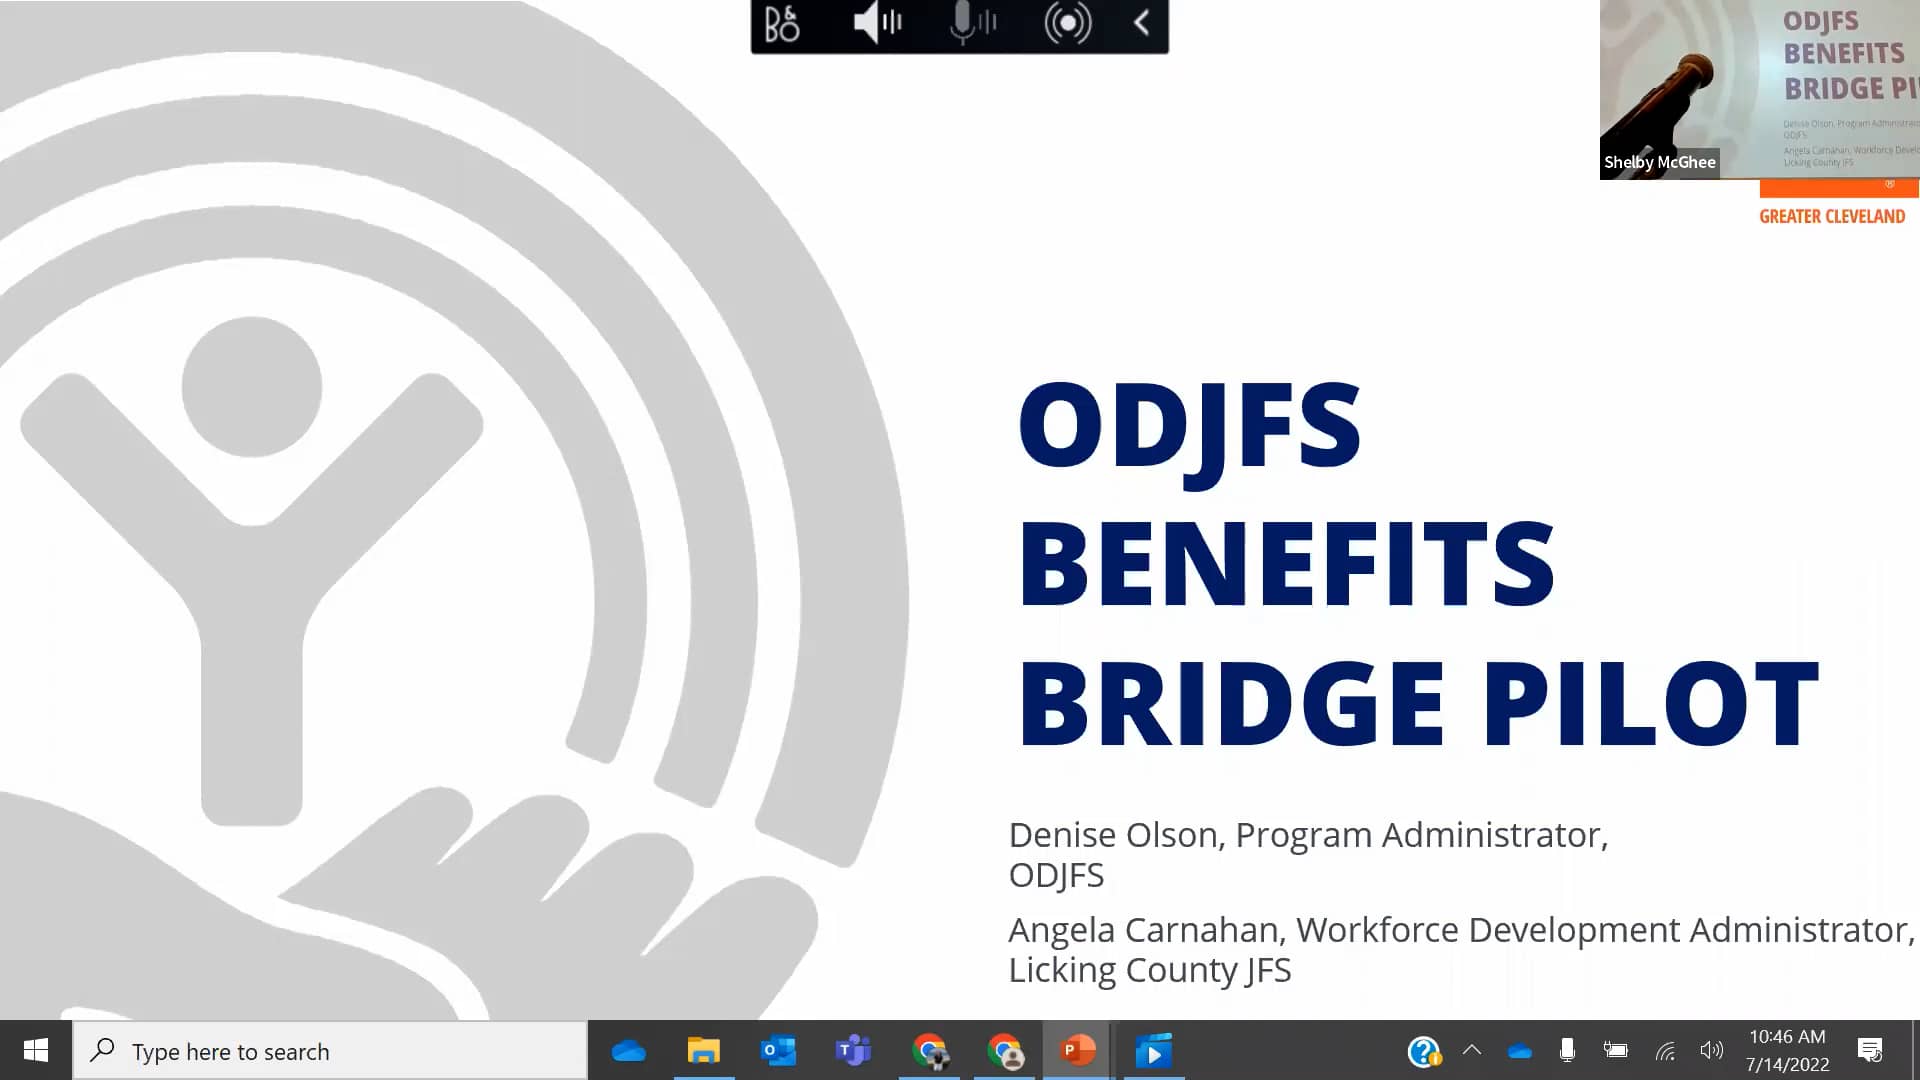 ODJFS Benefits Bridge Pilot on Vimeo